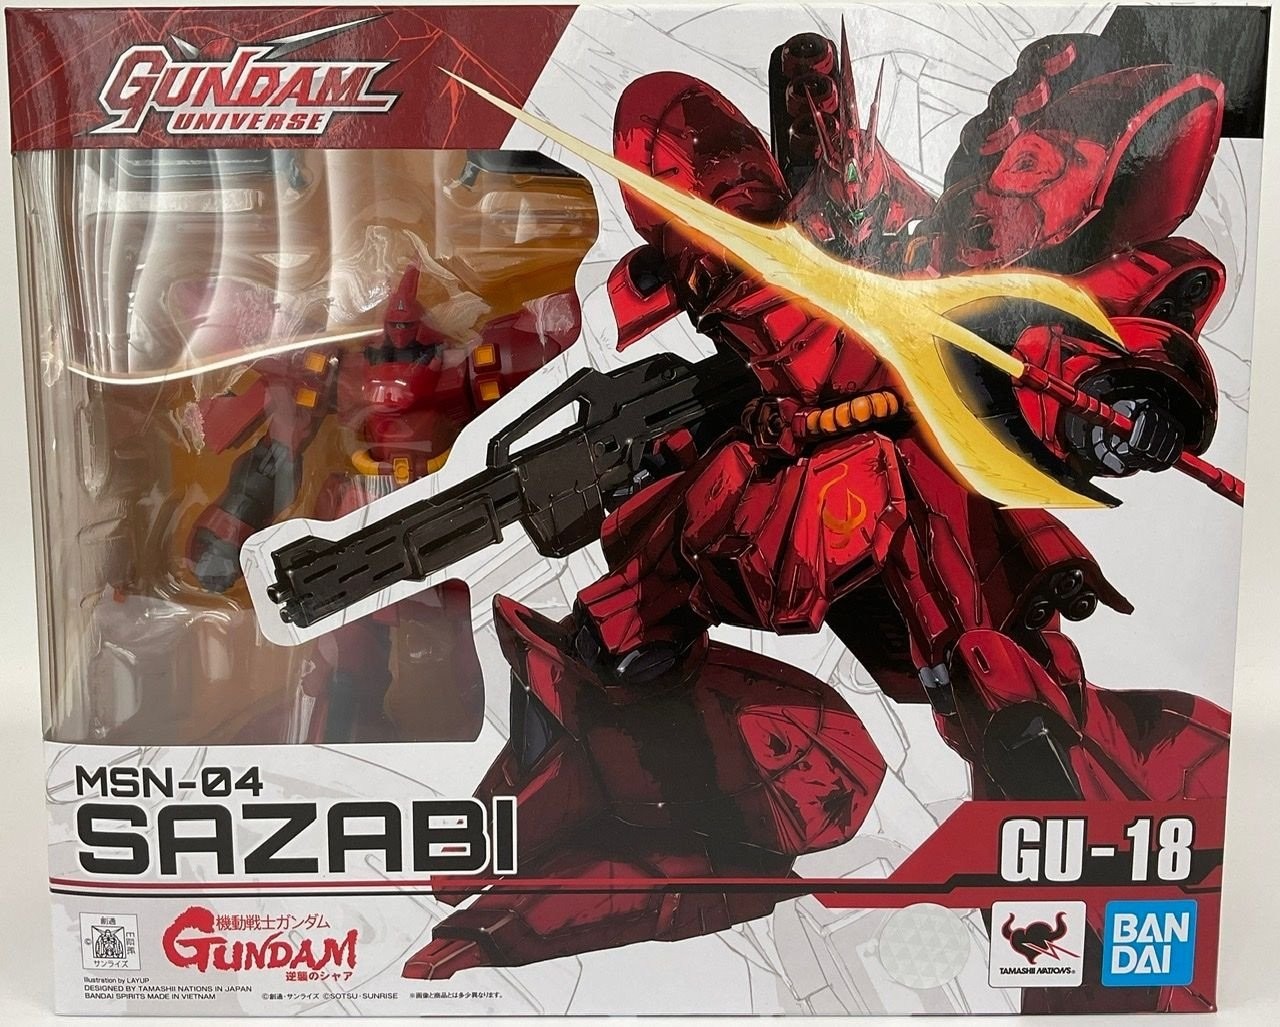 Gundam Universe MSN-04 Sazabi Action Figure